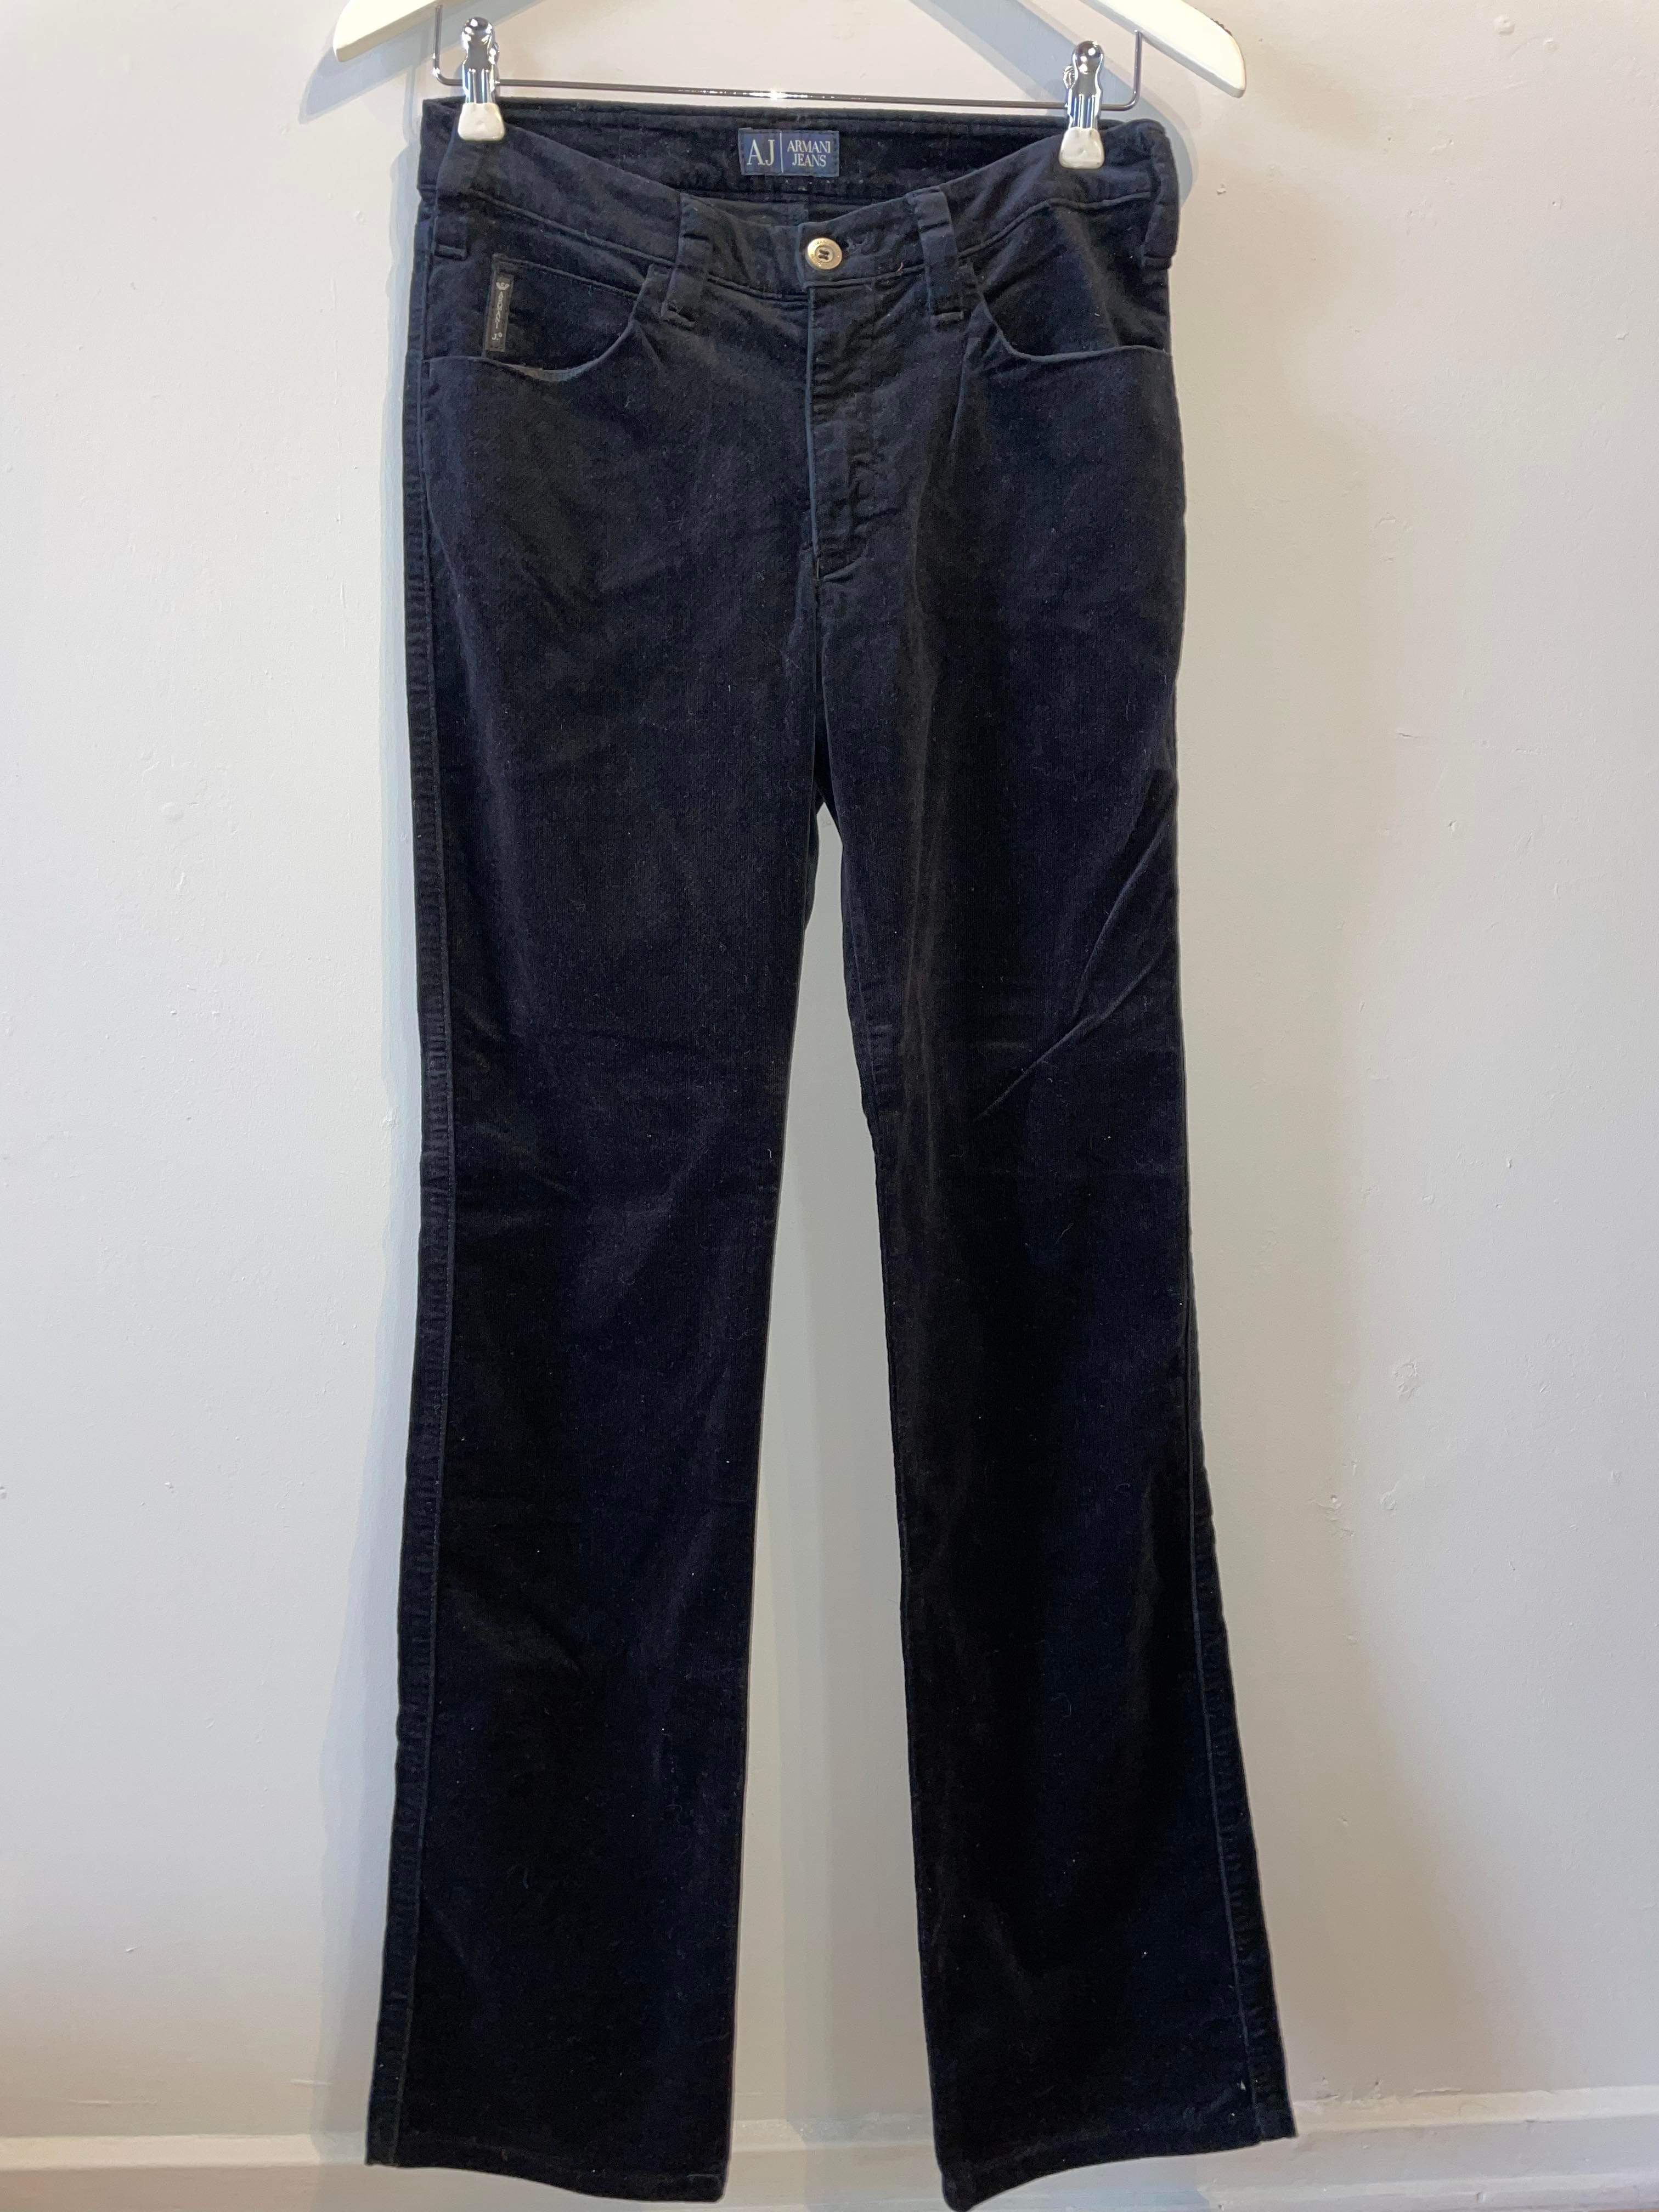 Armani Jeans - Jeans - Size: 29